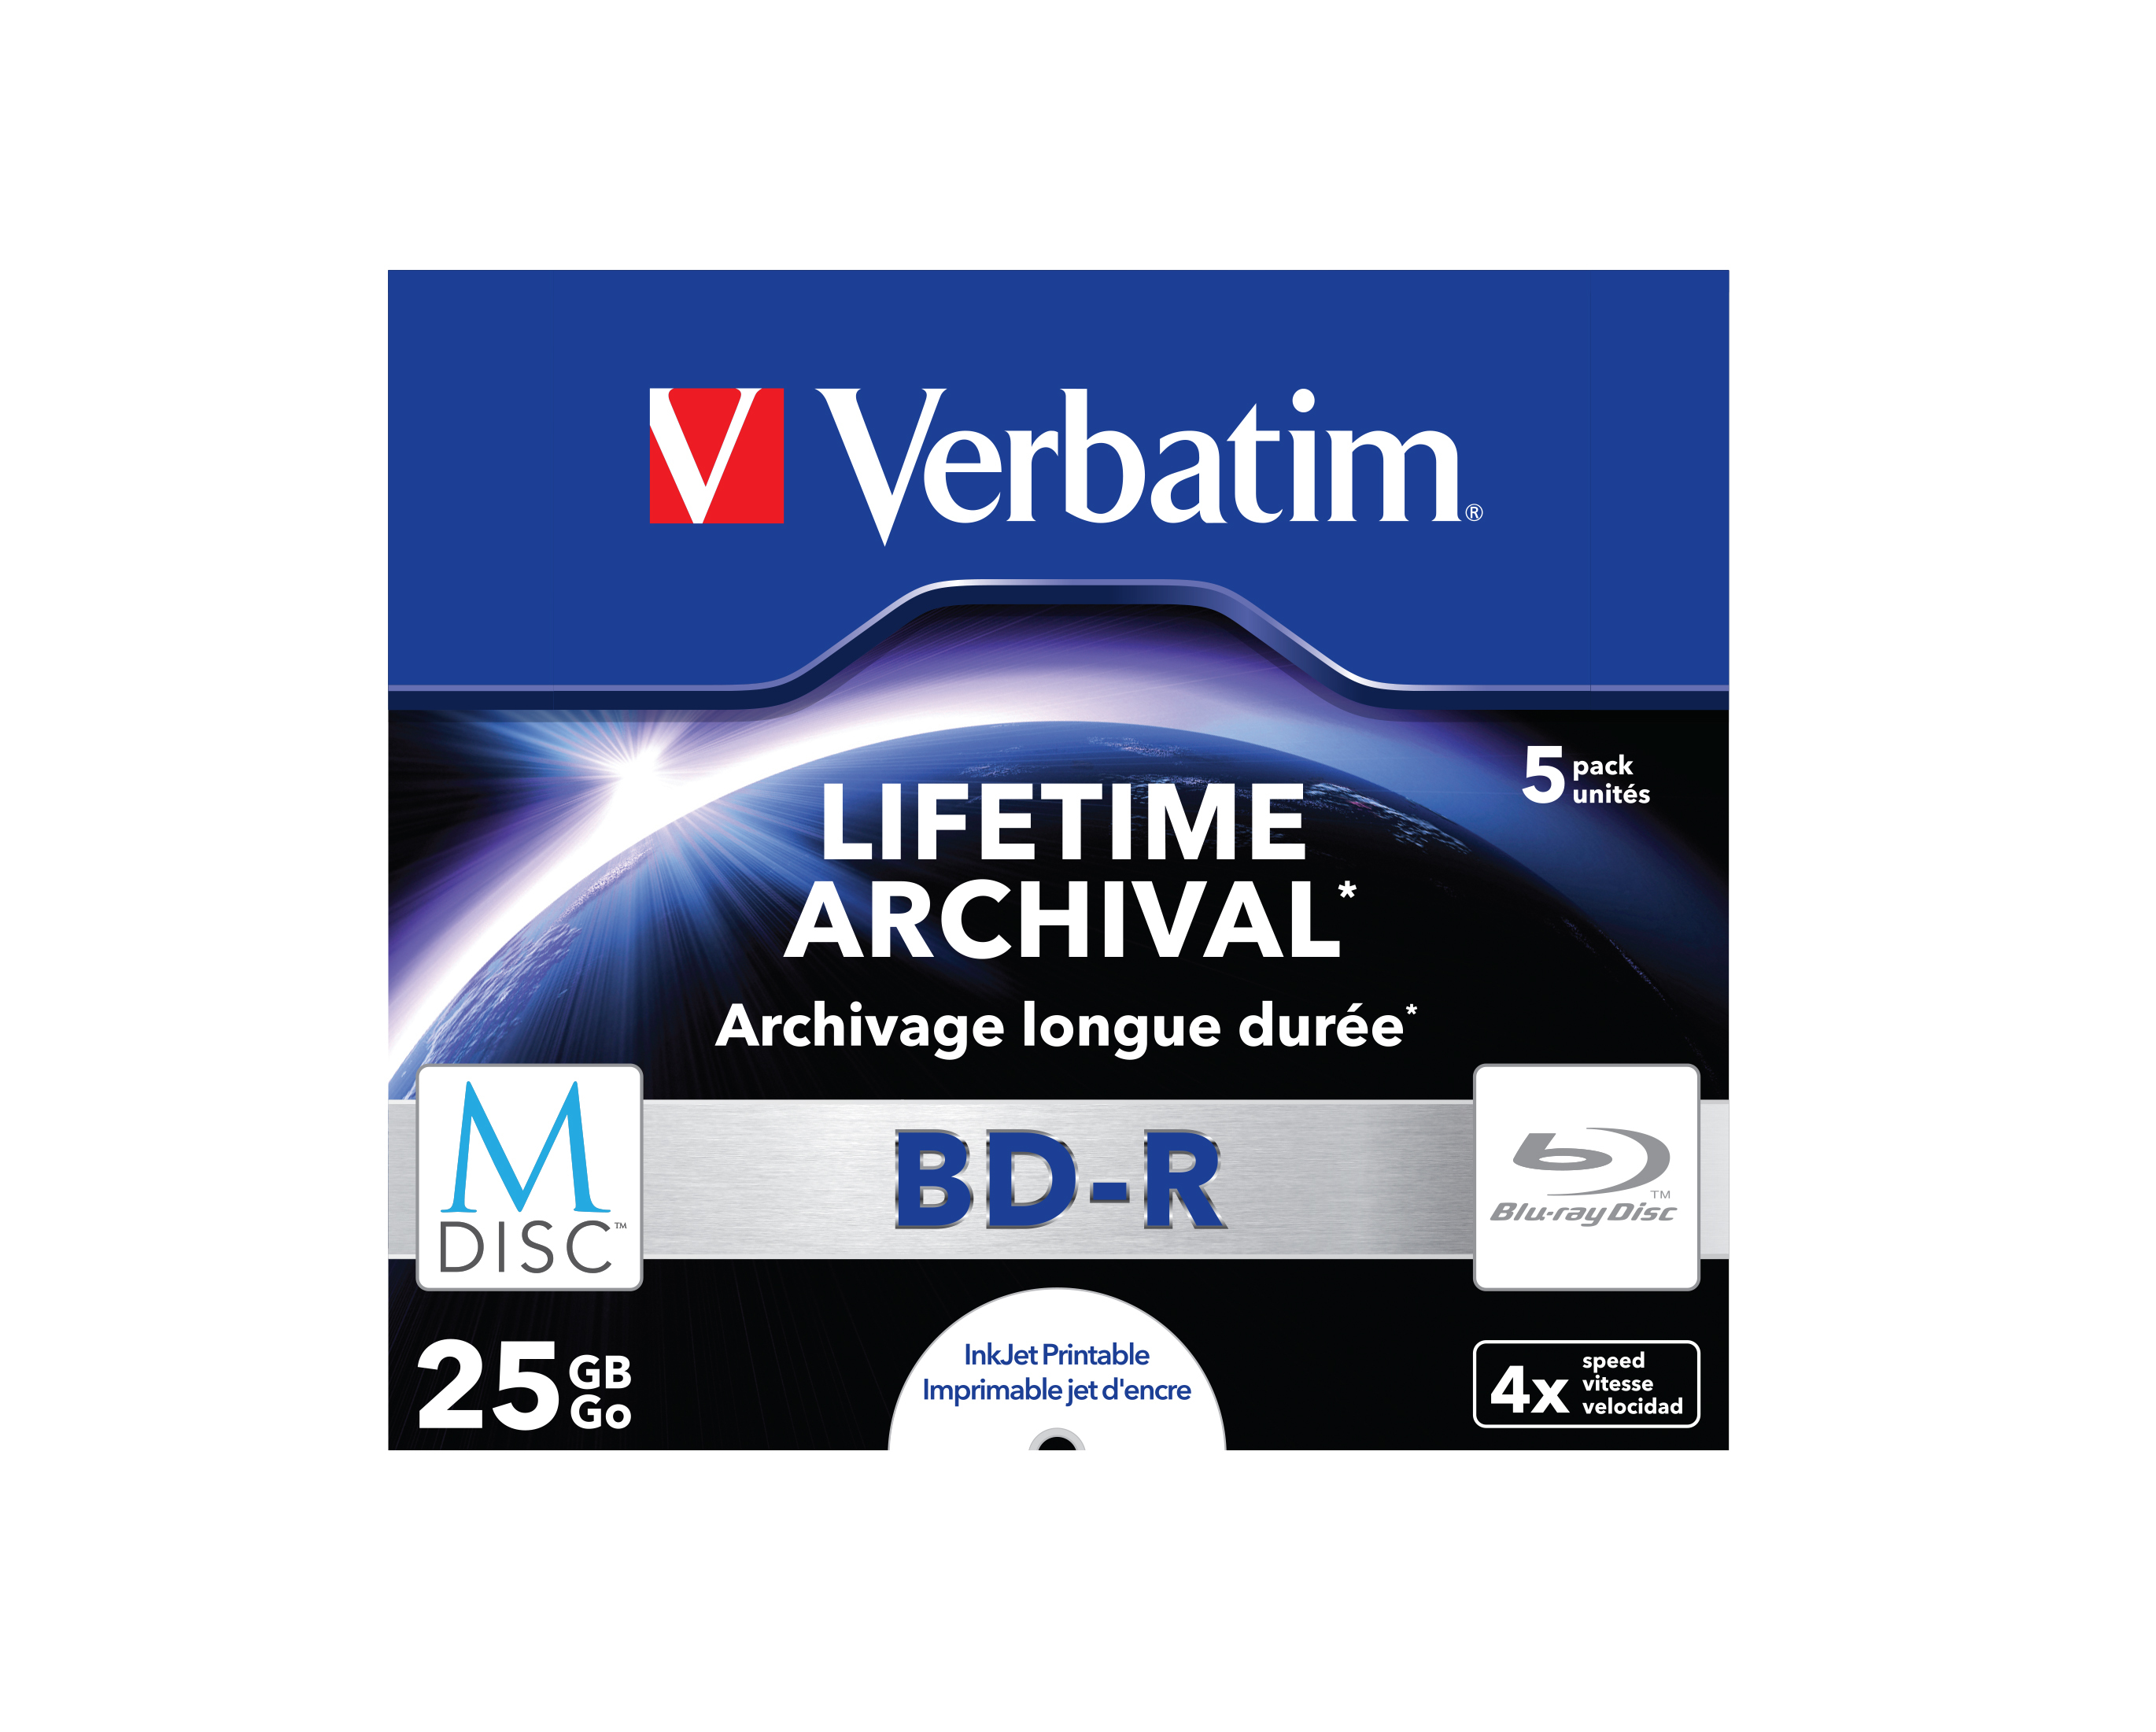 Verbatim M-DISC BD-R 25GB 4x 5pk JC 43823 - CMS01